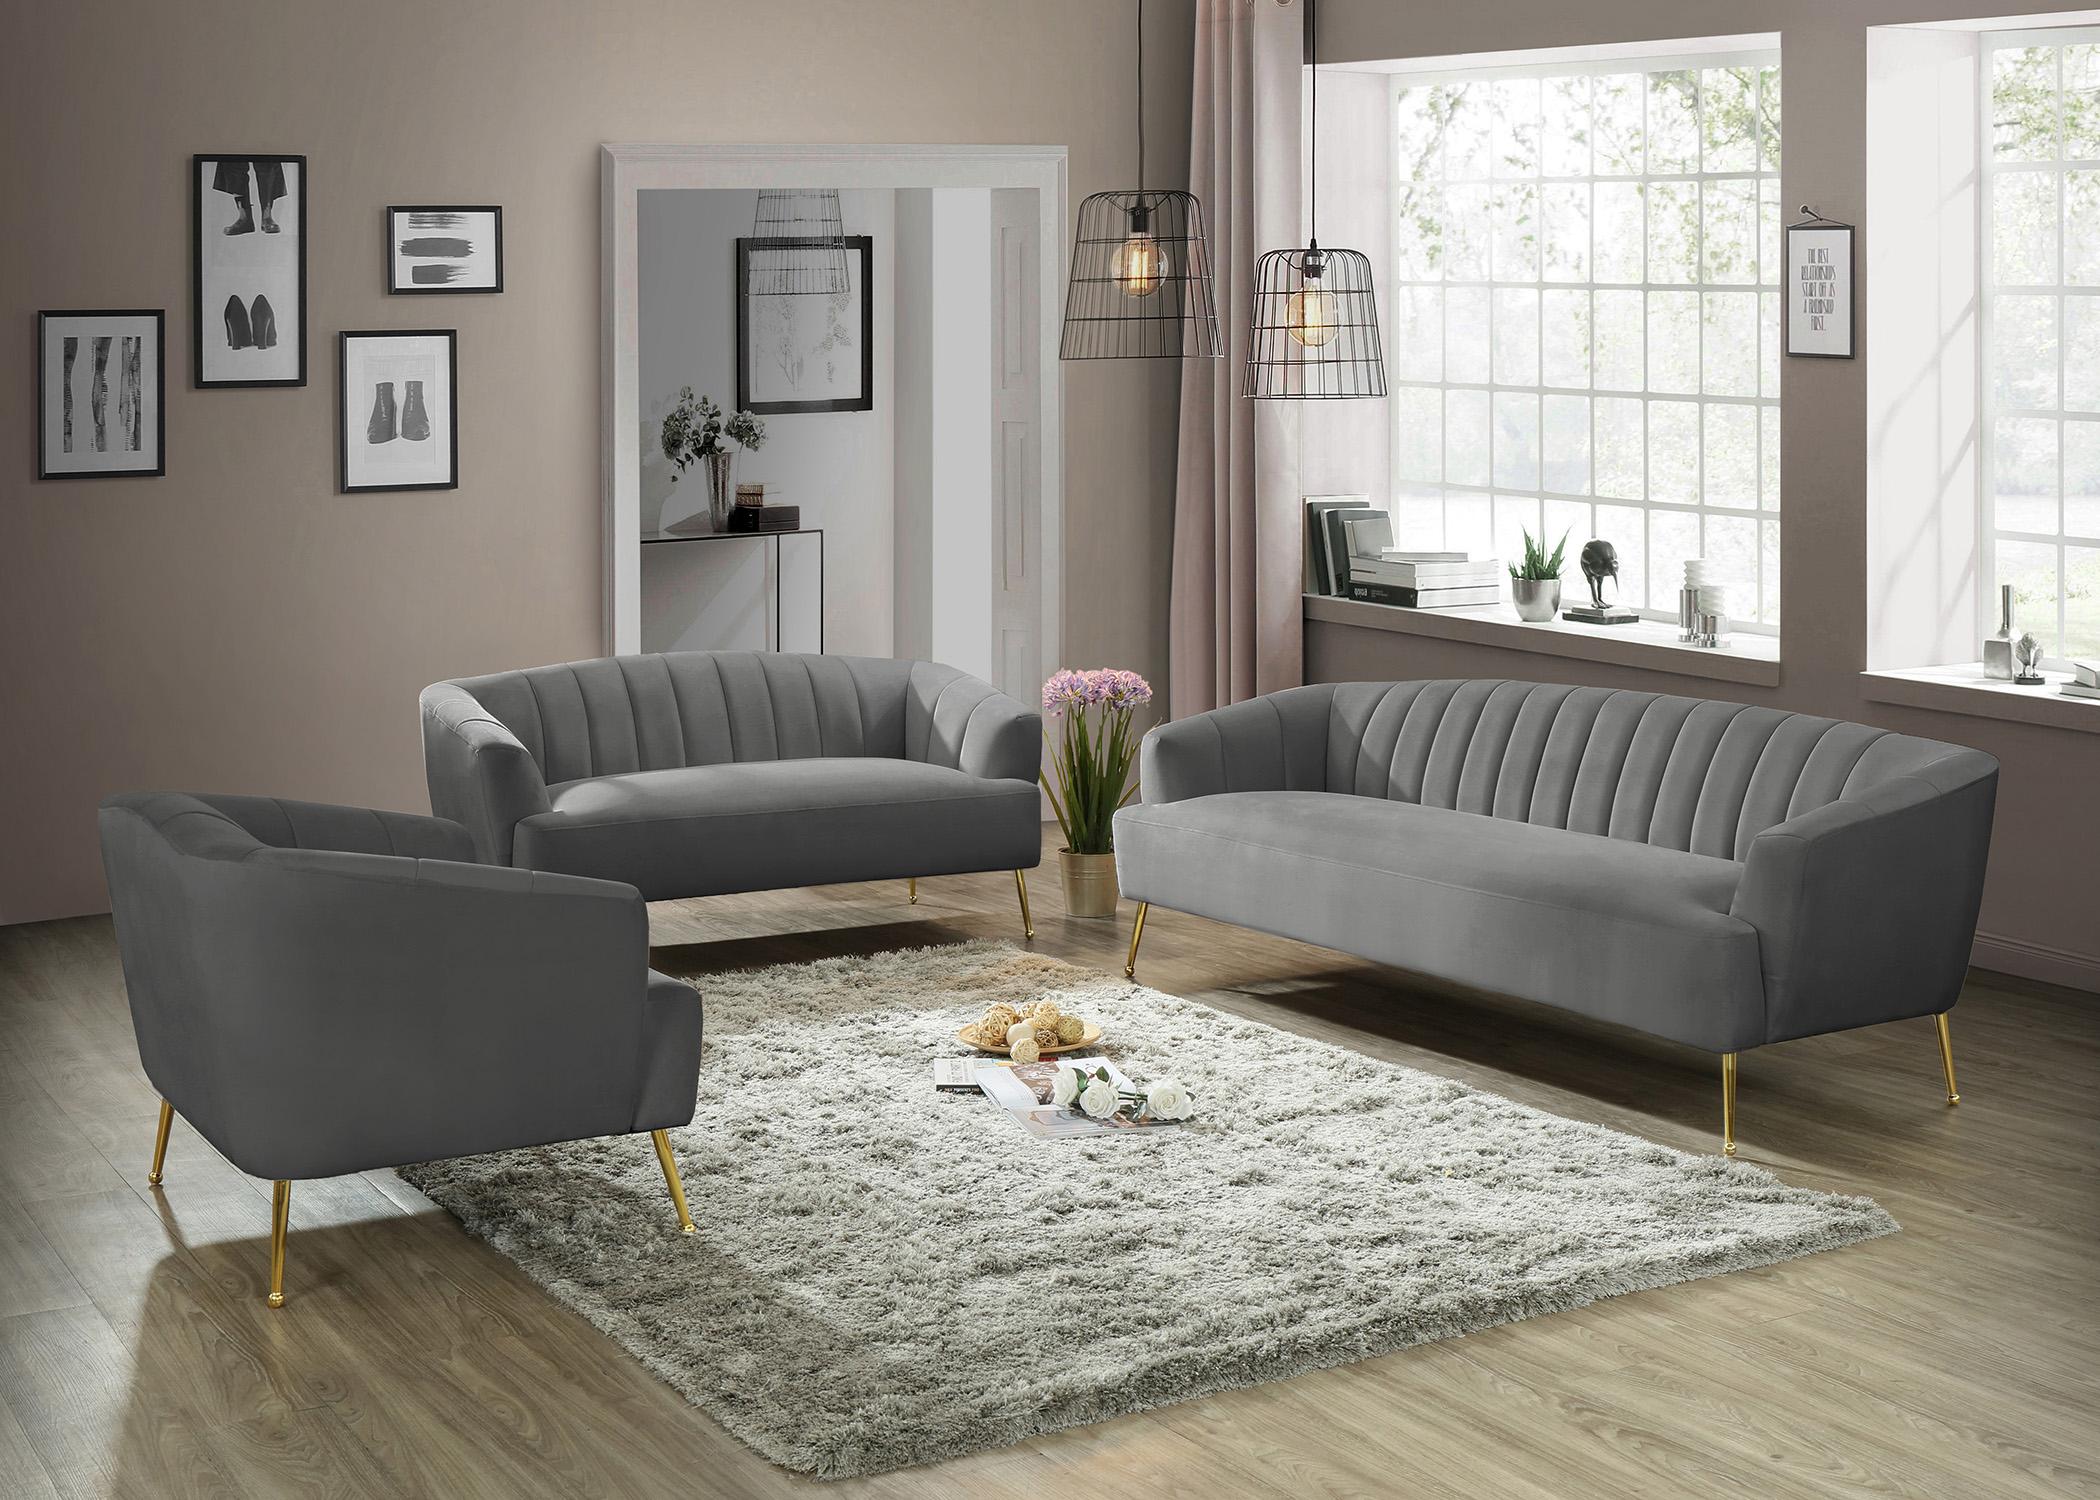 Contemporary, Modern Sofa Set TORI 657Grey-S-Set-3 657Grey-S-Set-3 in Gray Velvet